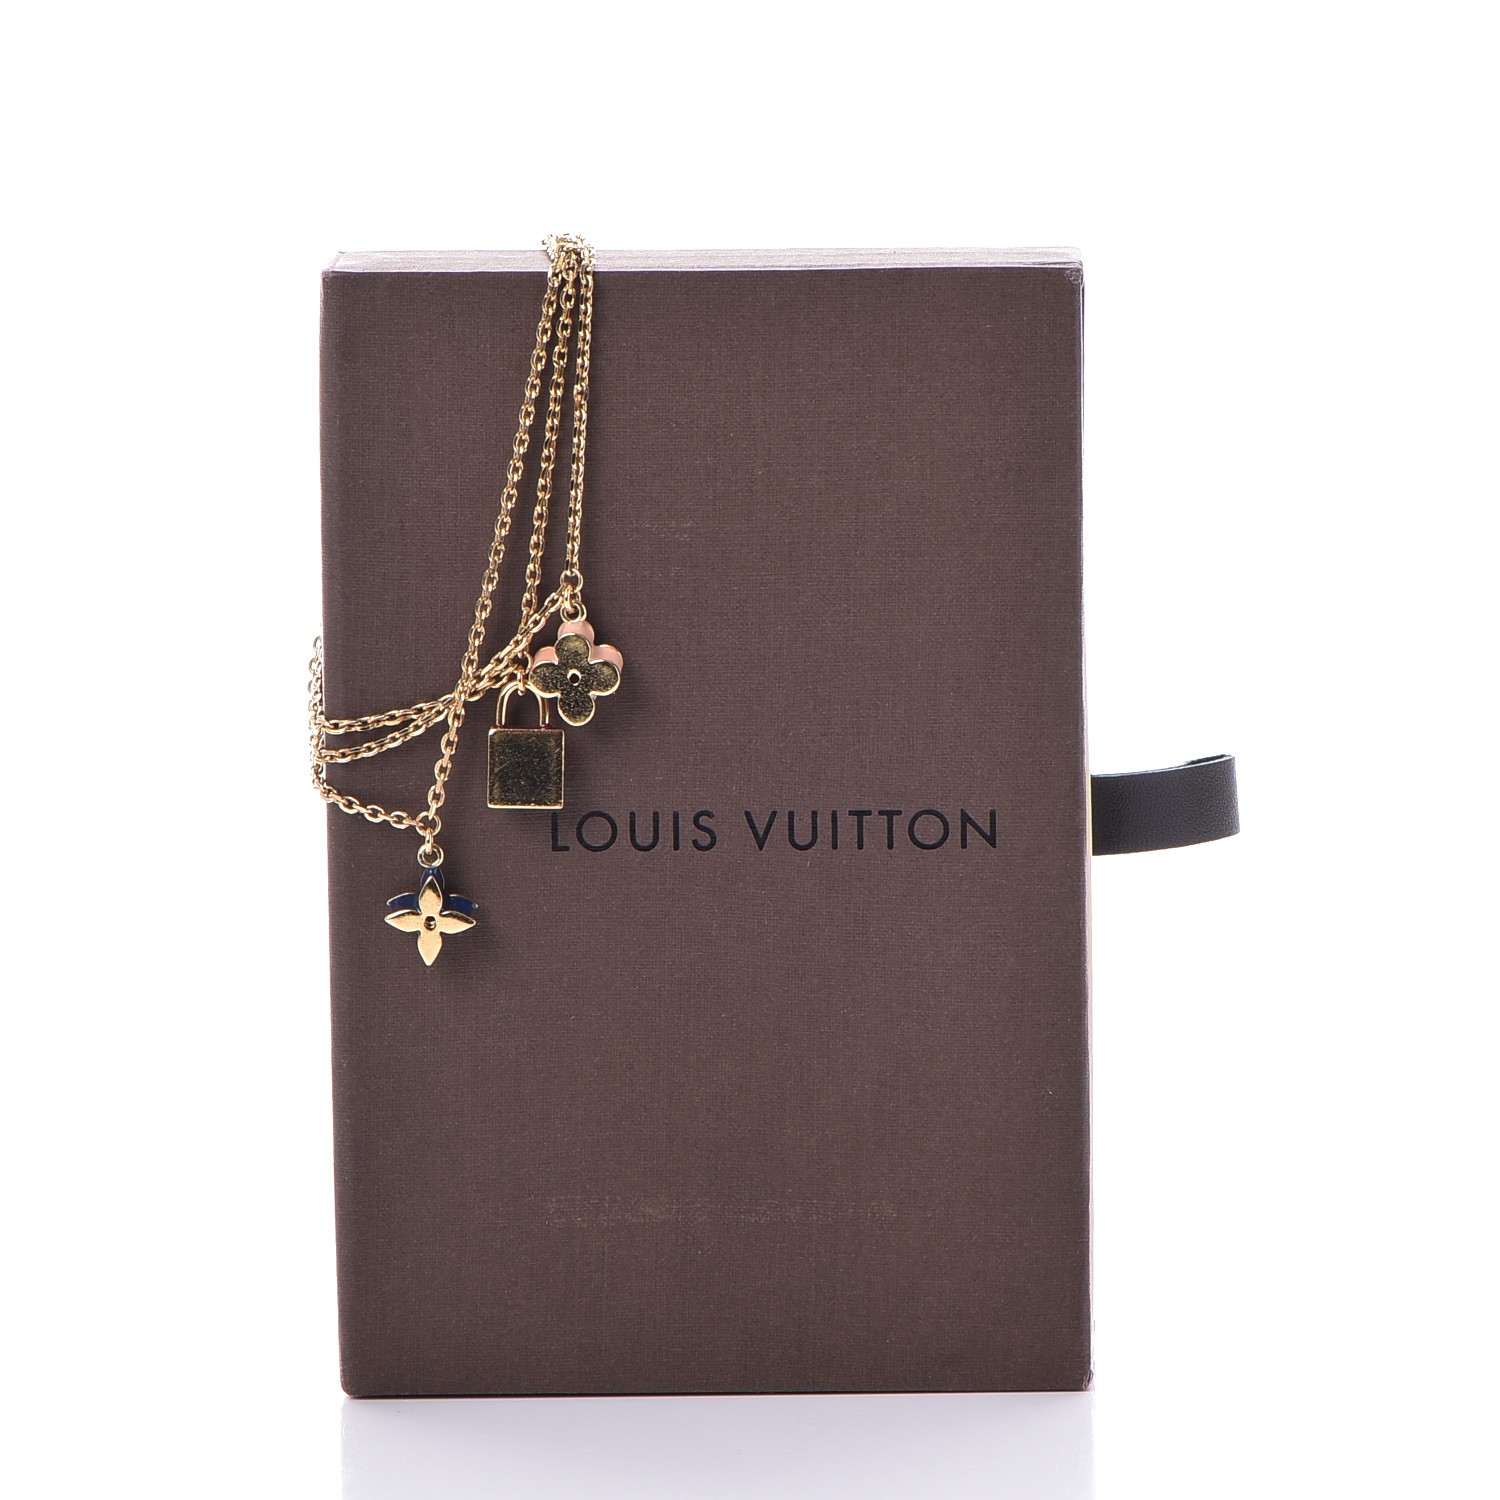 Louis Vuitton M63160 Bracelet Brown Leather Monogram Logo Studs Wristband